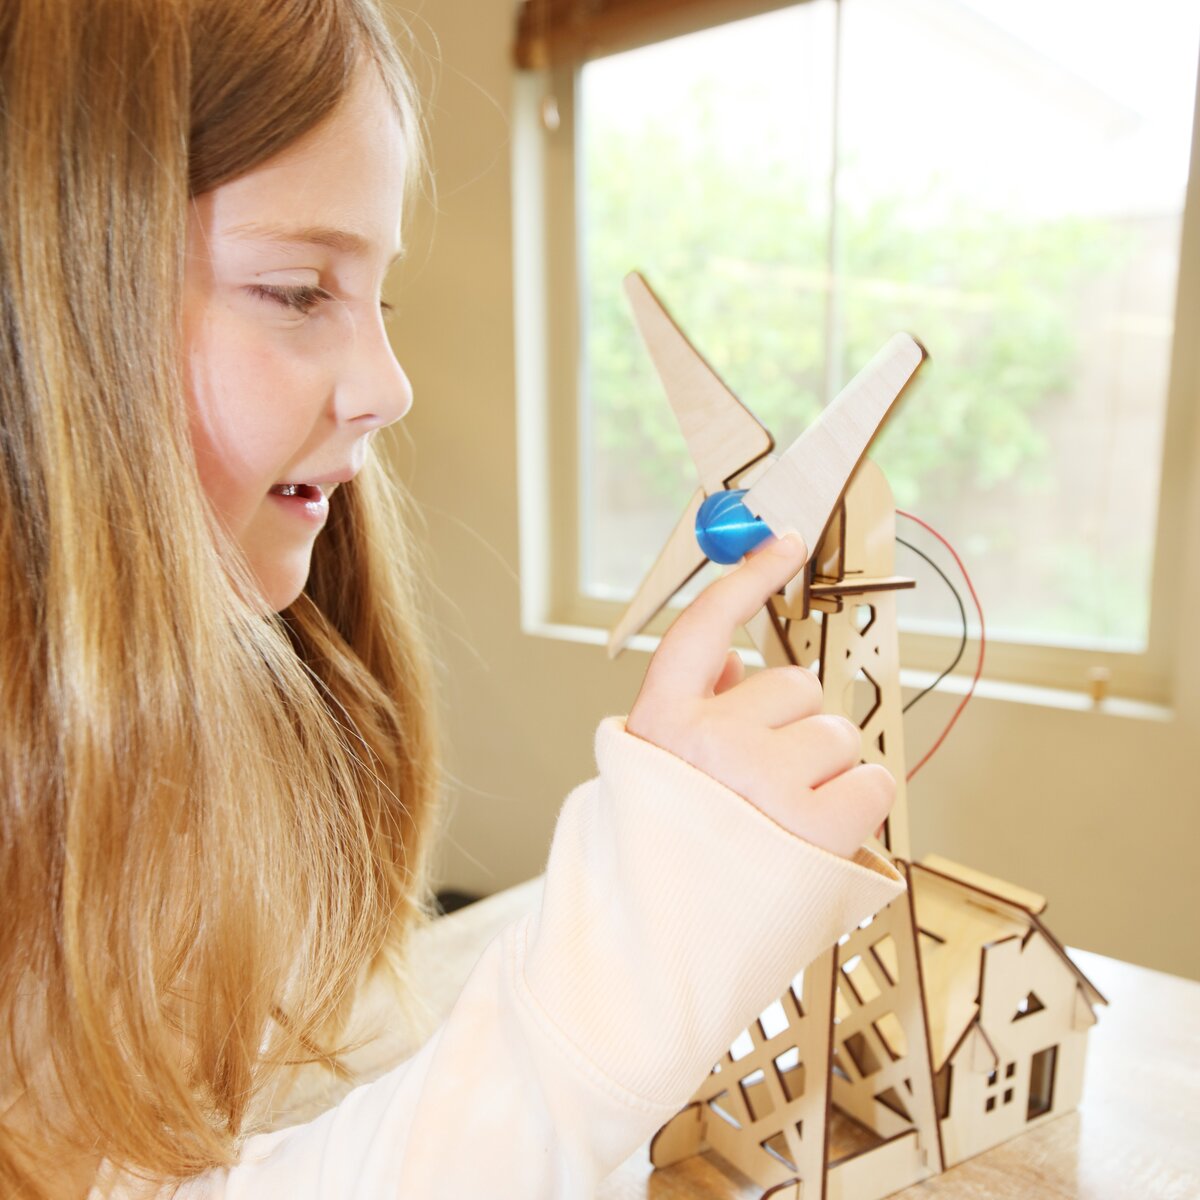 BrainStorm STEM Wind Energy Science Experiment Kit for Kids